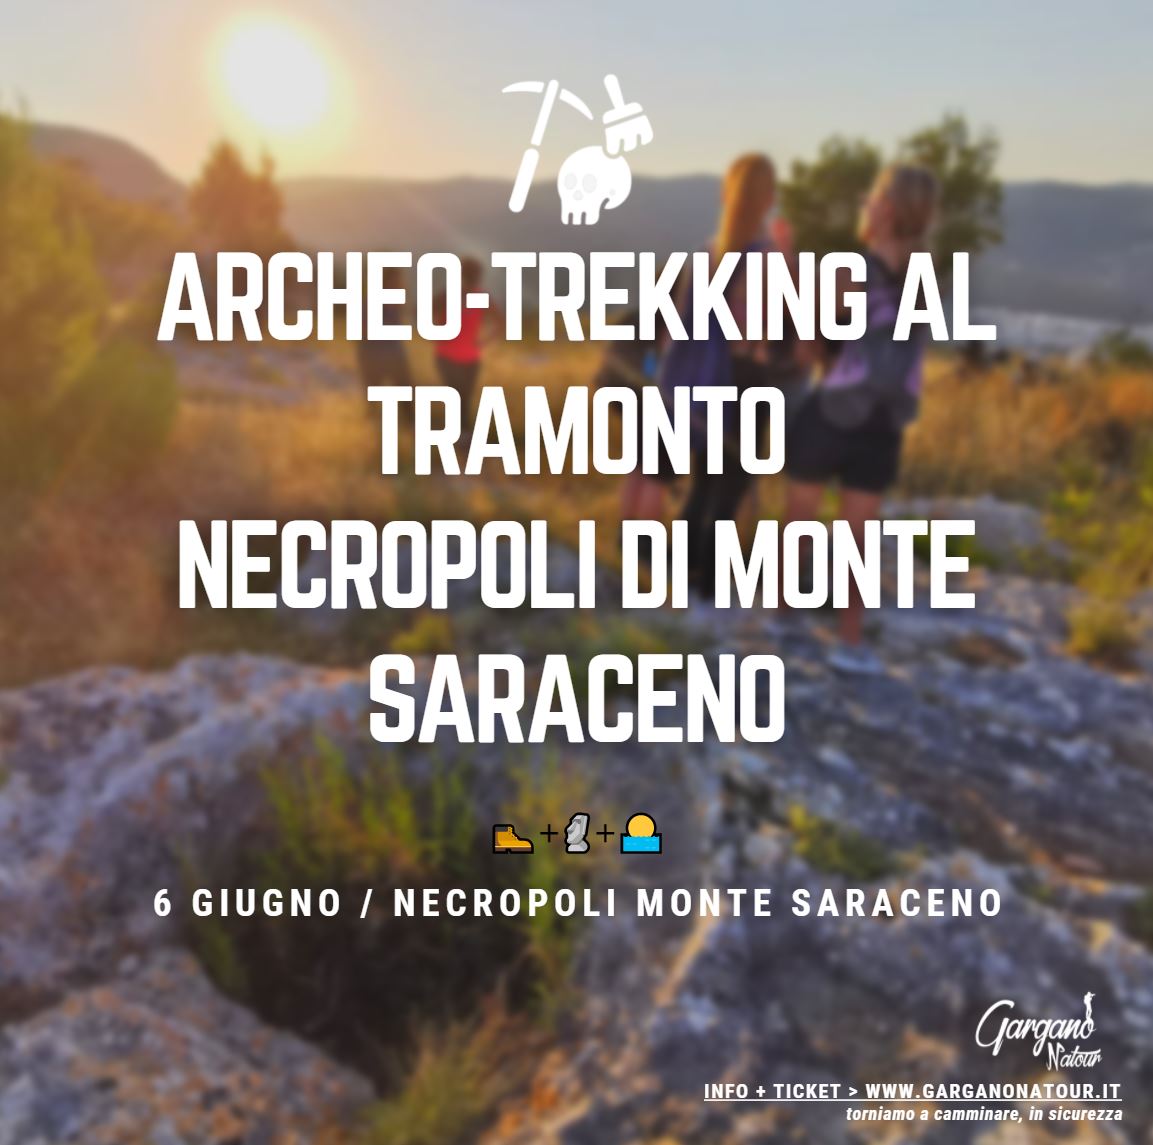 Mattinata, archeo-trekking al tramonto sul Monte Saraceno 